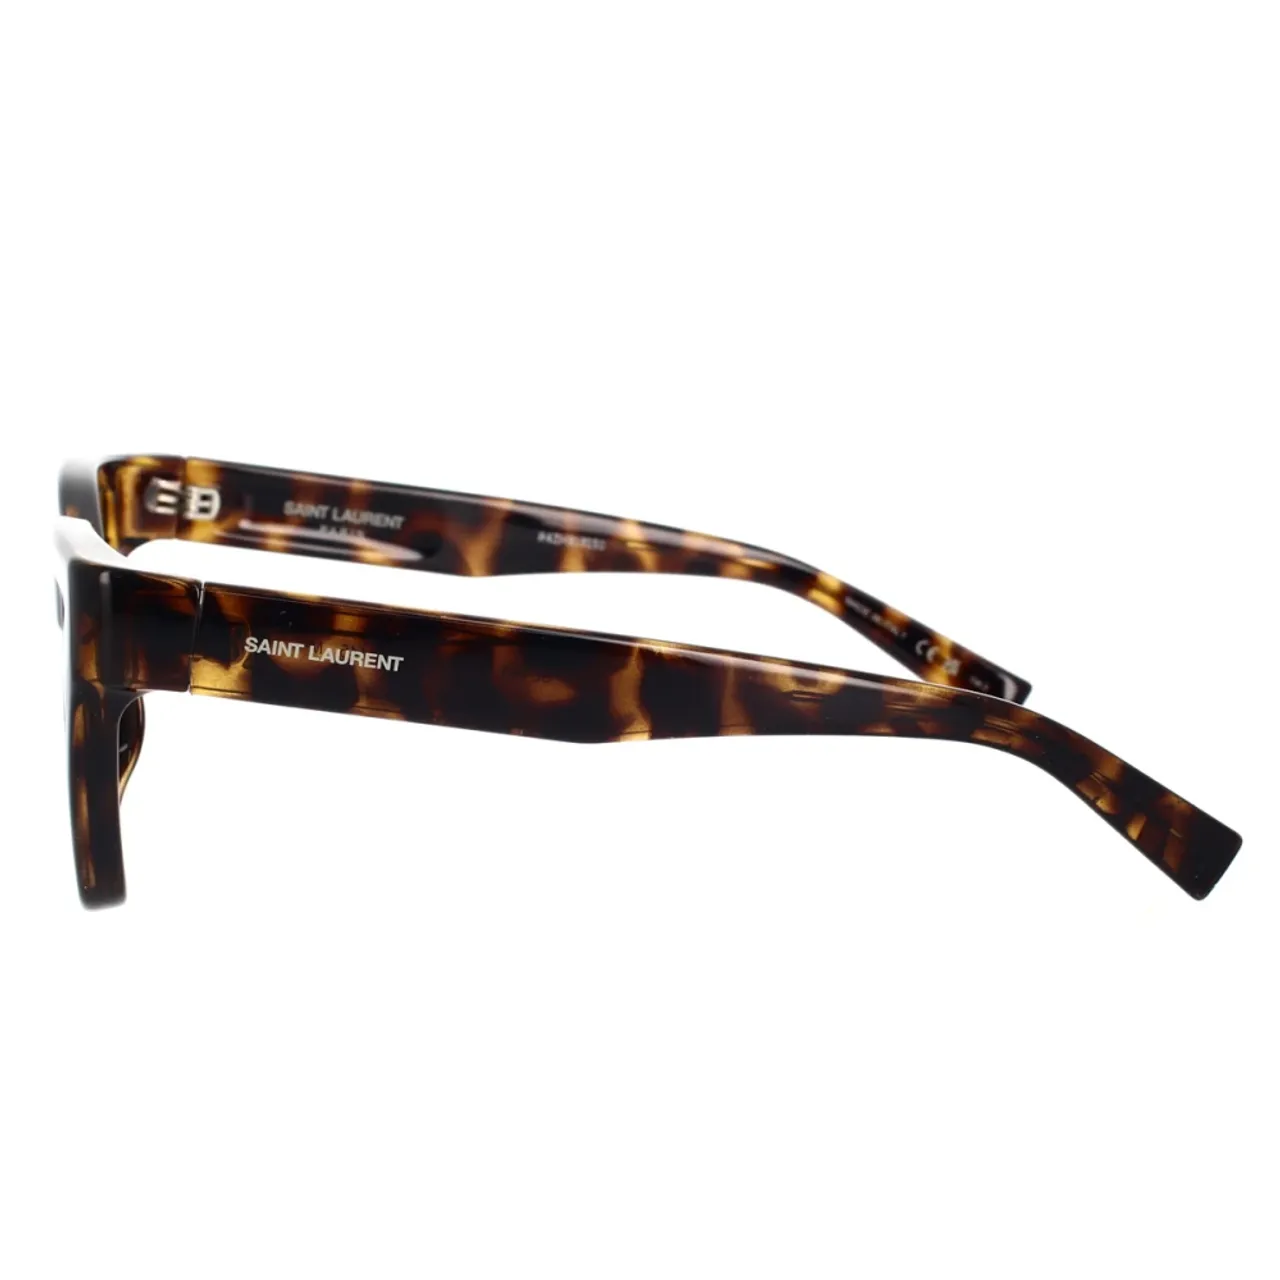 Vintage-inspirierte Sonnenbrille SL 641 002 Saint Laurent